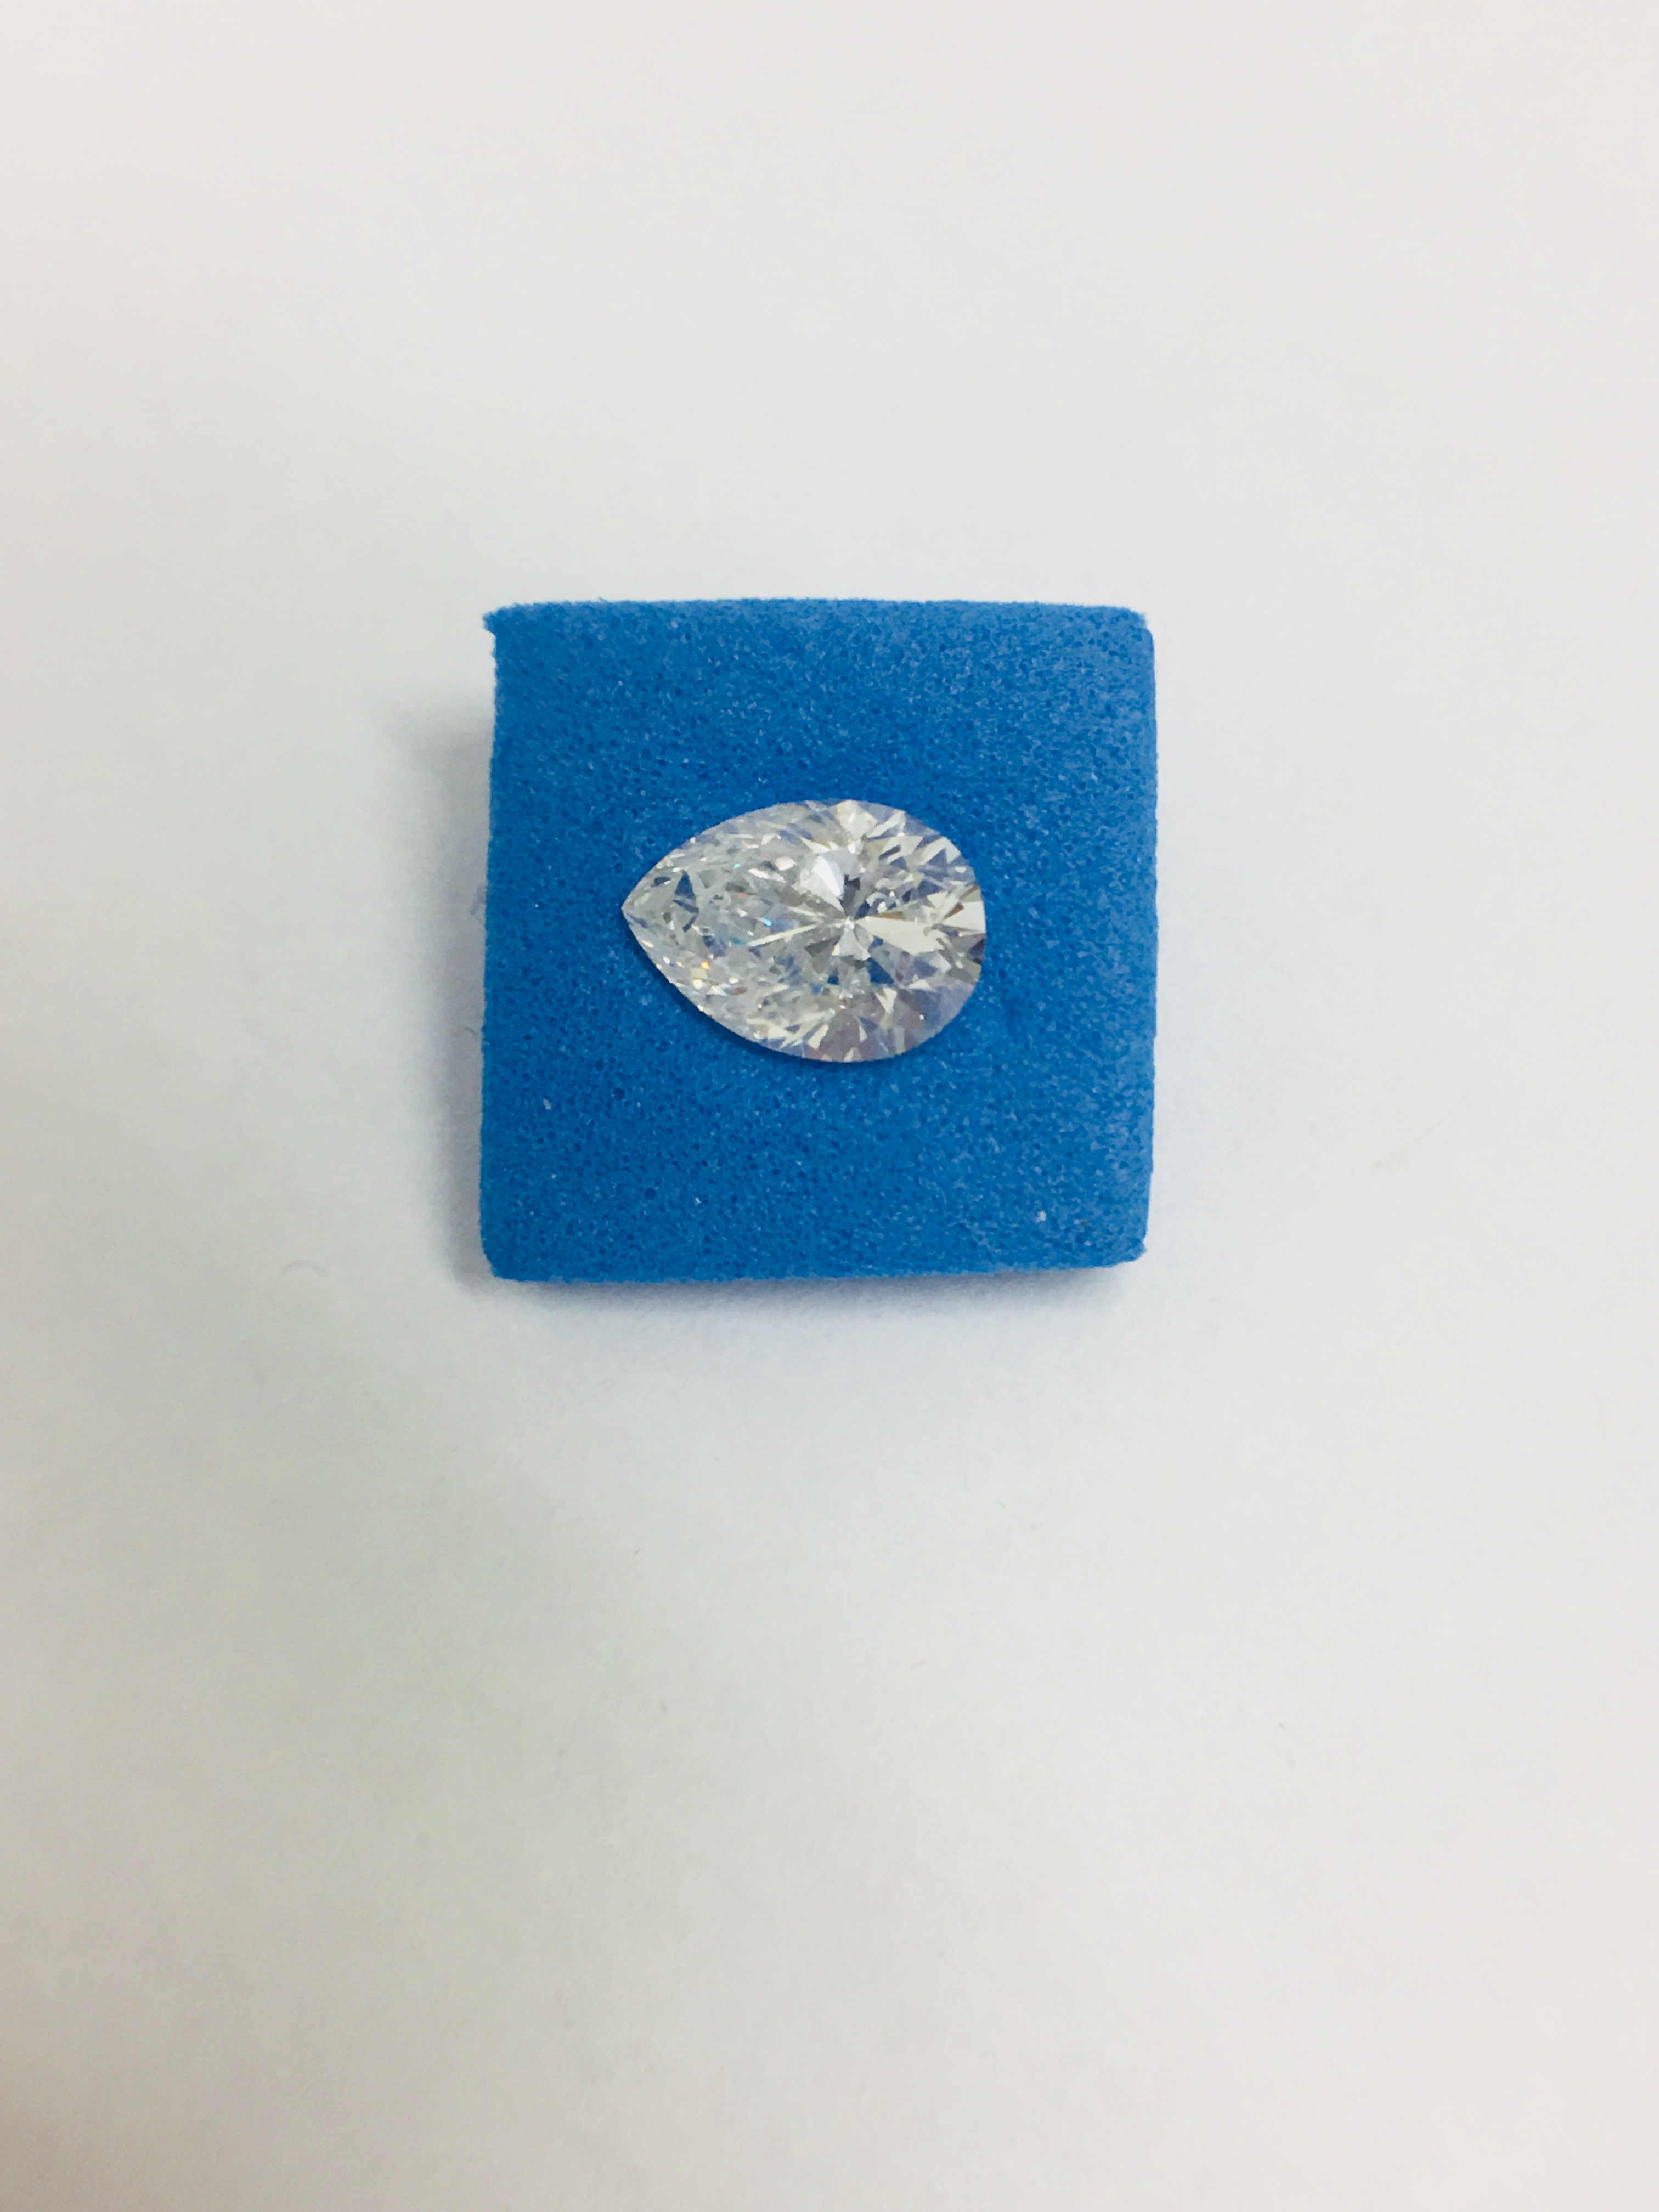 1.16ct pearshape loose diamond natural stone